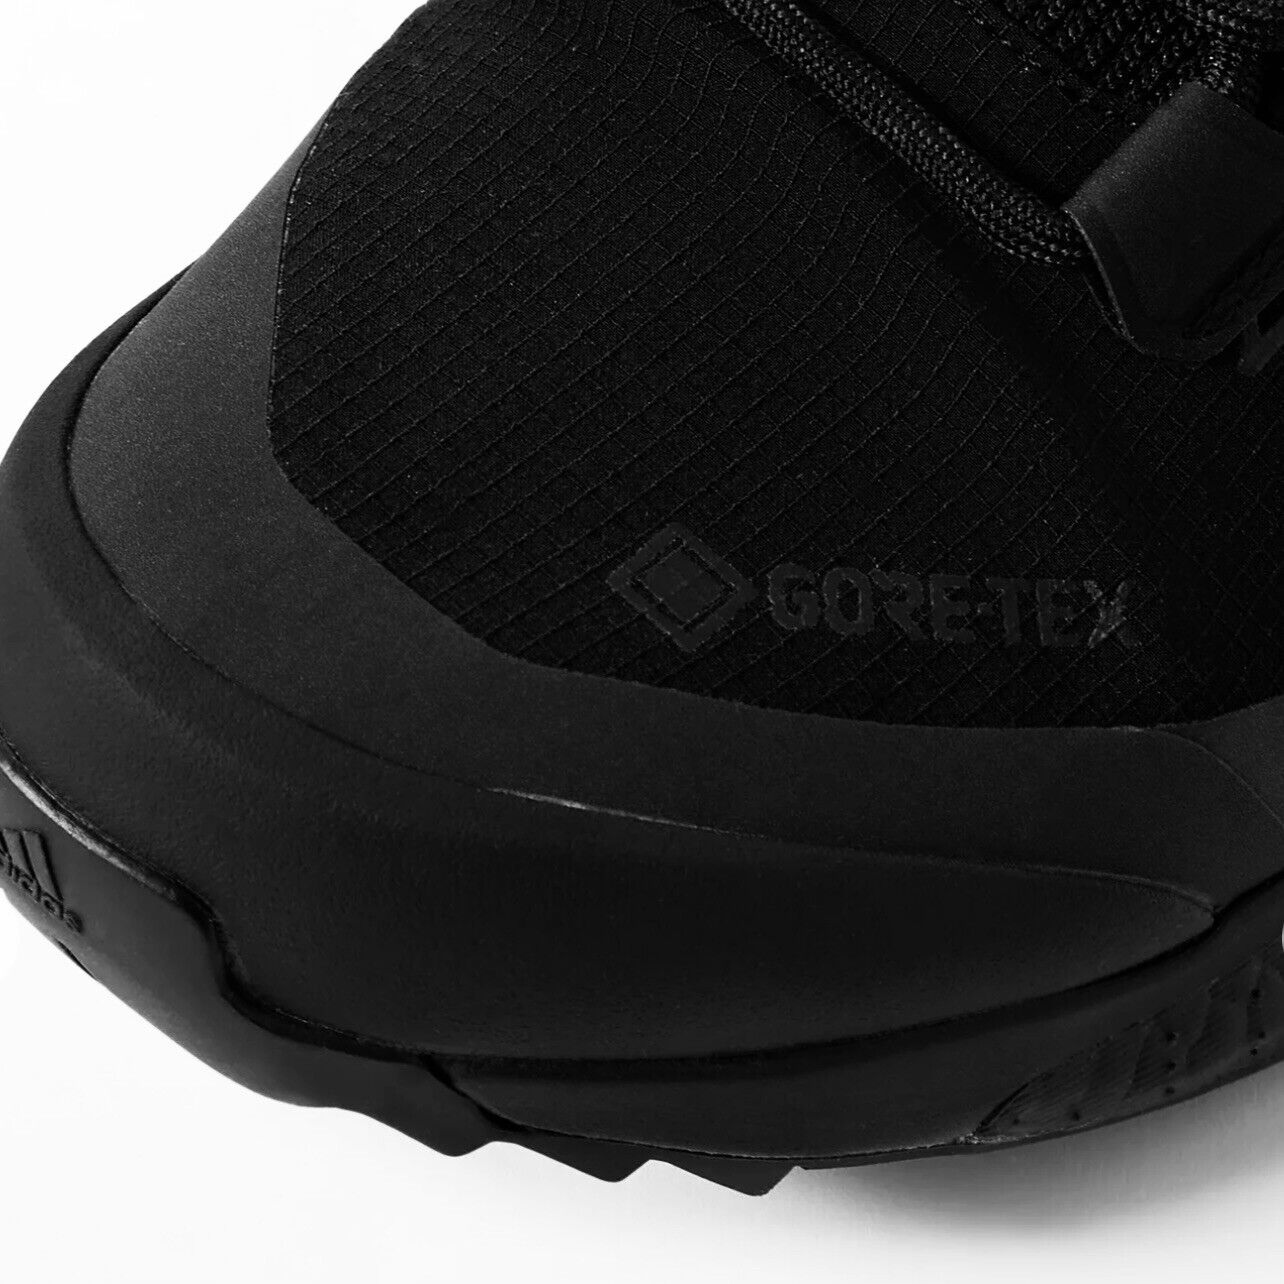 Adidas Terrex Free Hiker Gore-TEX Men’s Athletic Shoe Hiking Sneaker Boot  #355